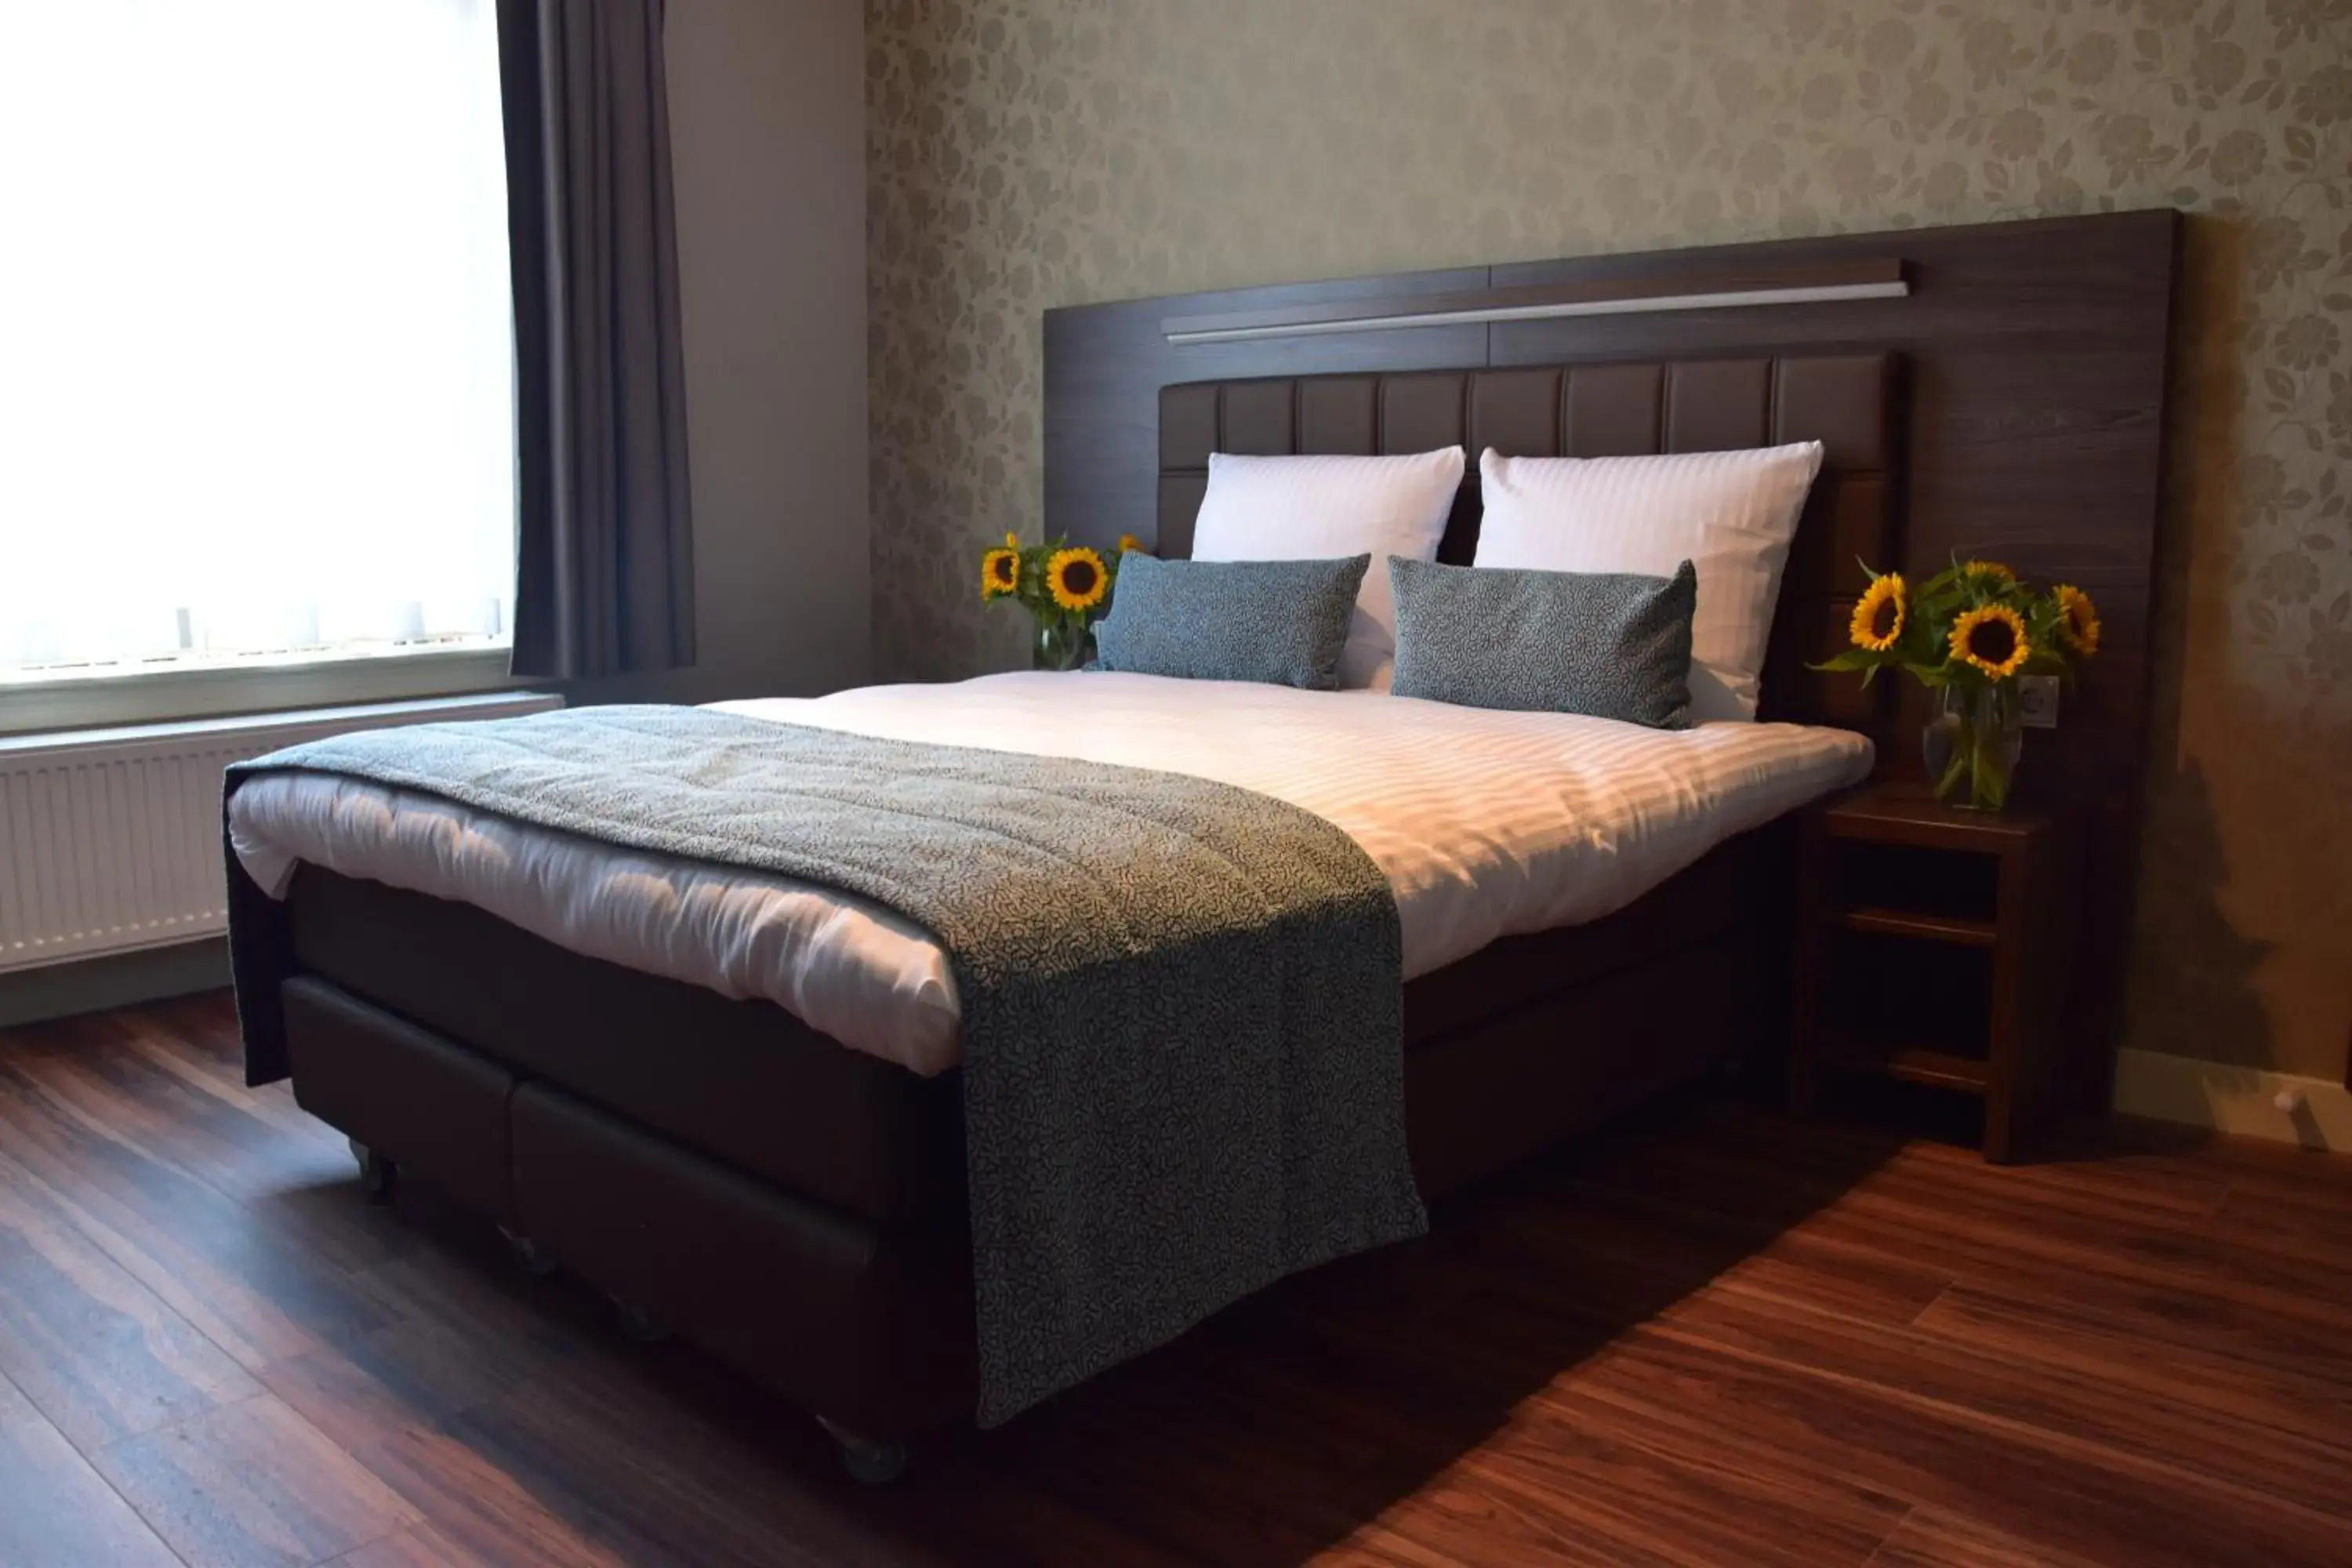 Bedroom, Room Photo in Ozo Hotels Armada Amsterdam